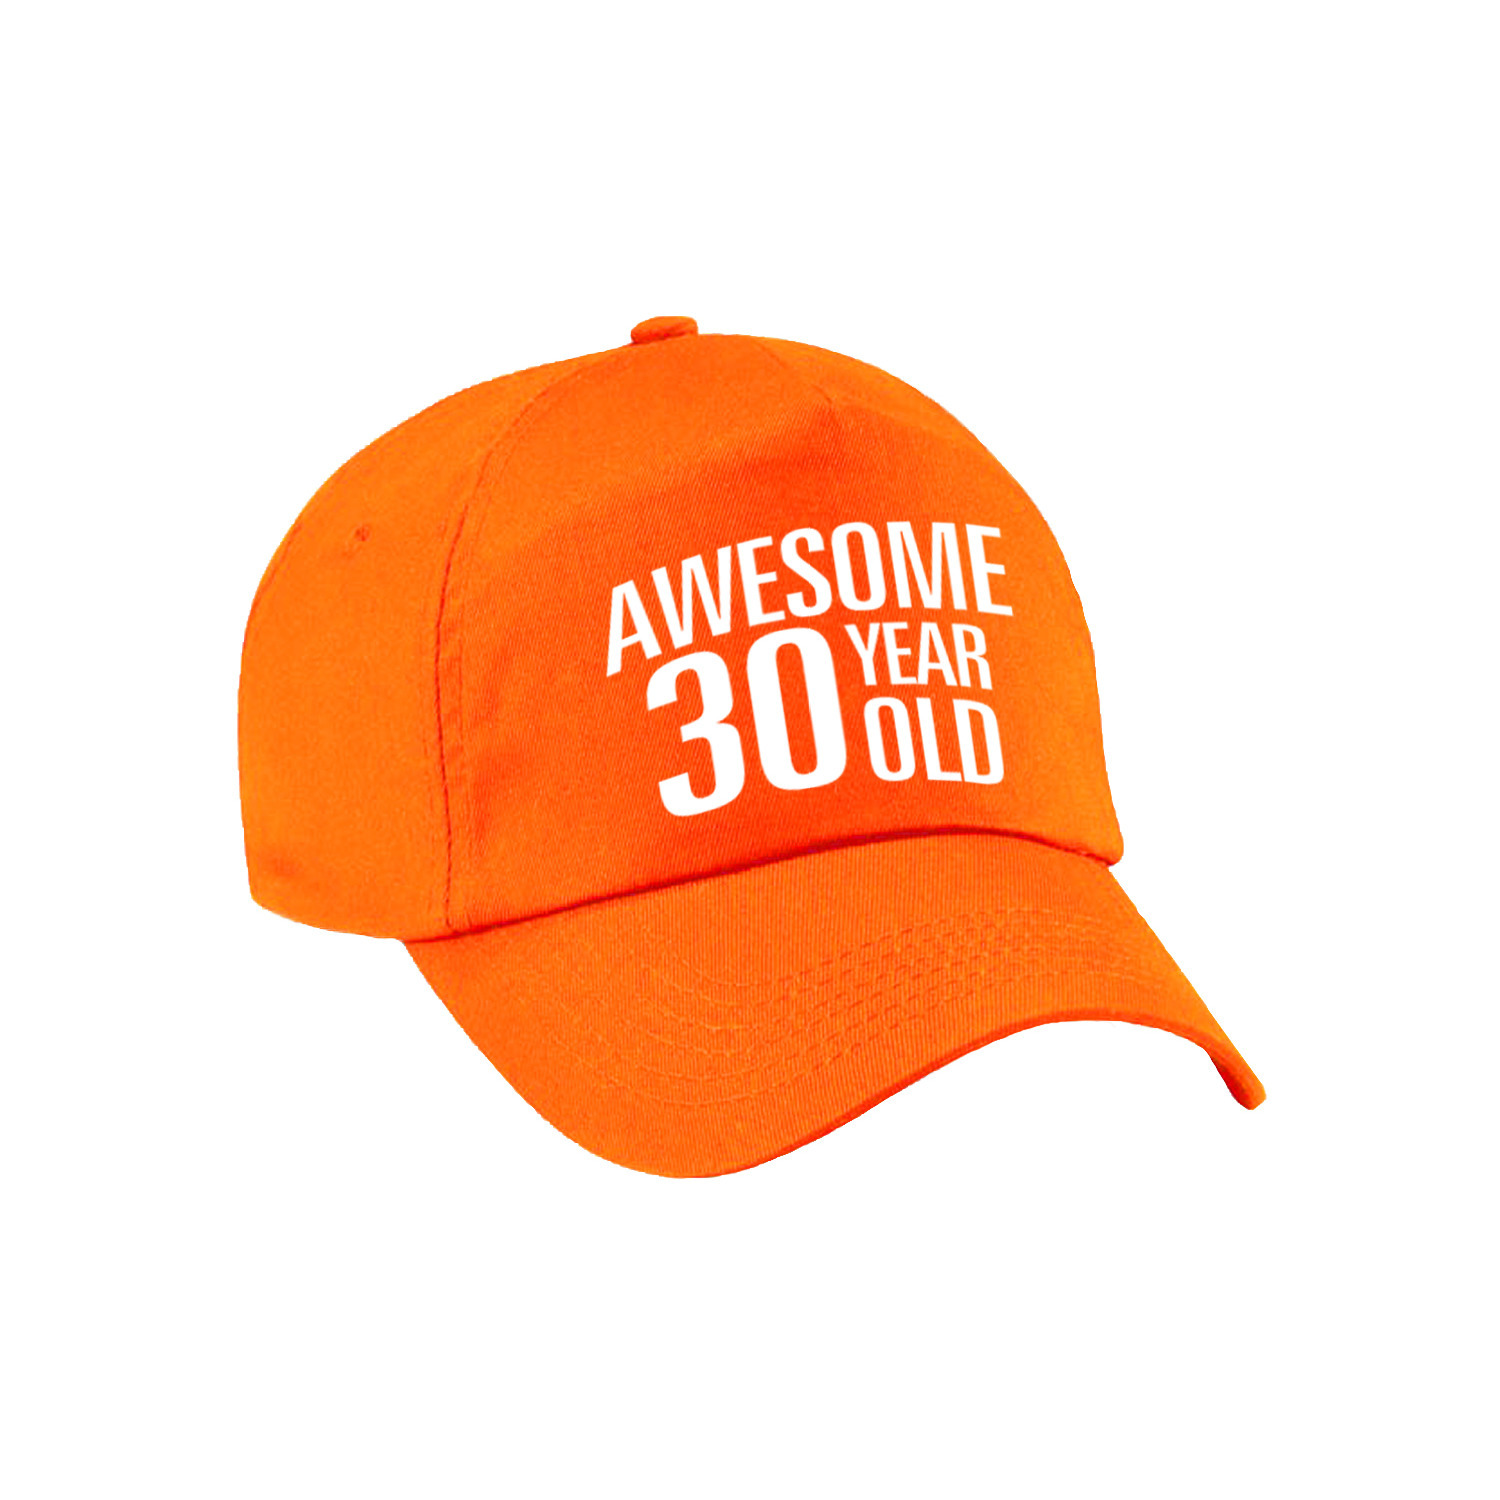 Awesome 30 year old verjaardag pet / cap oranje voor dames en heren